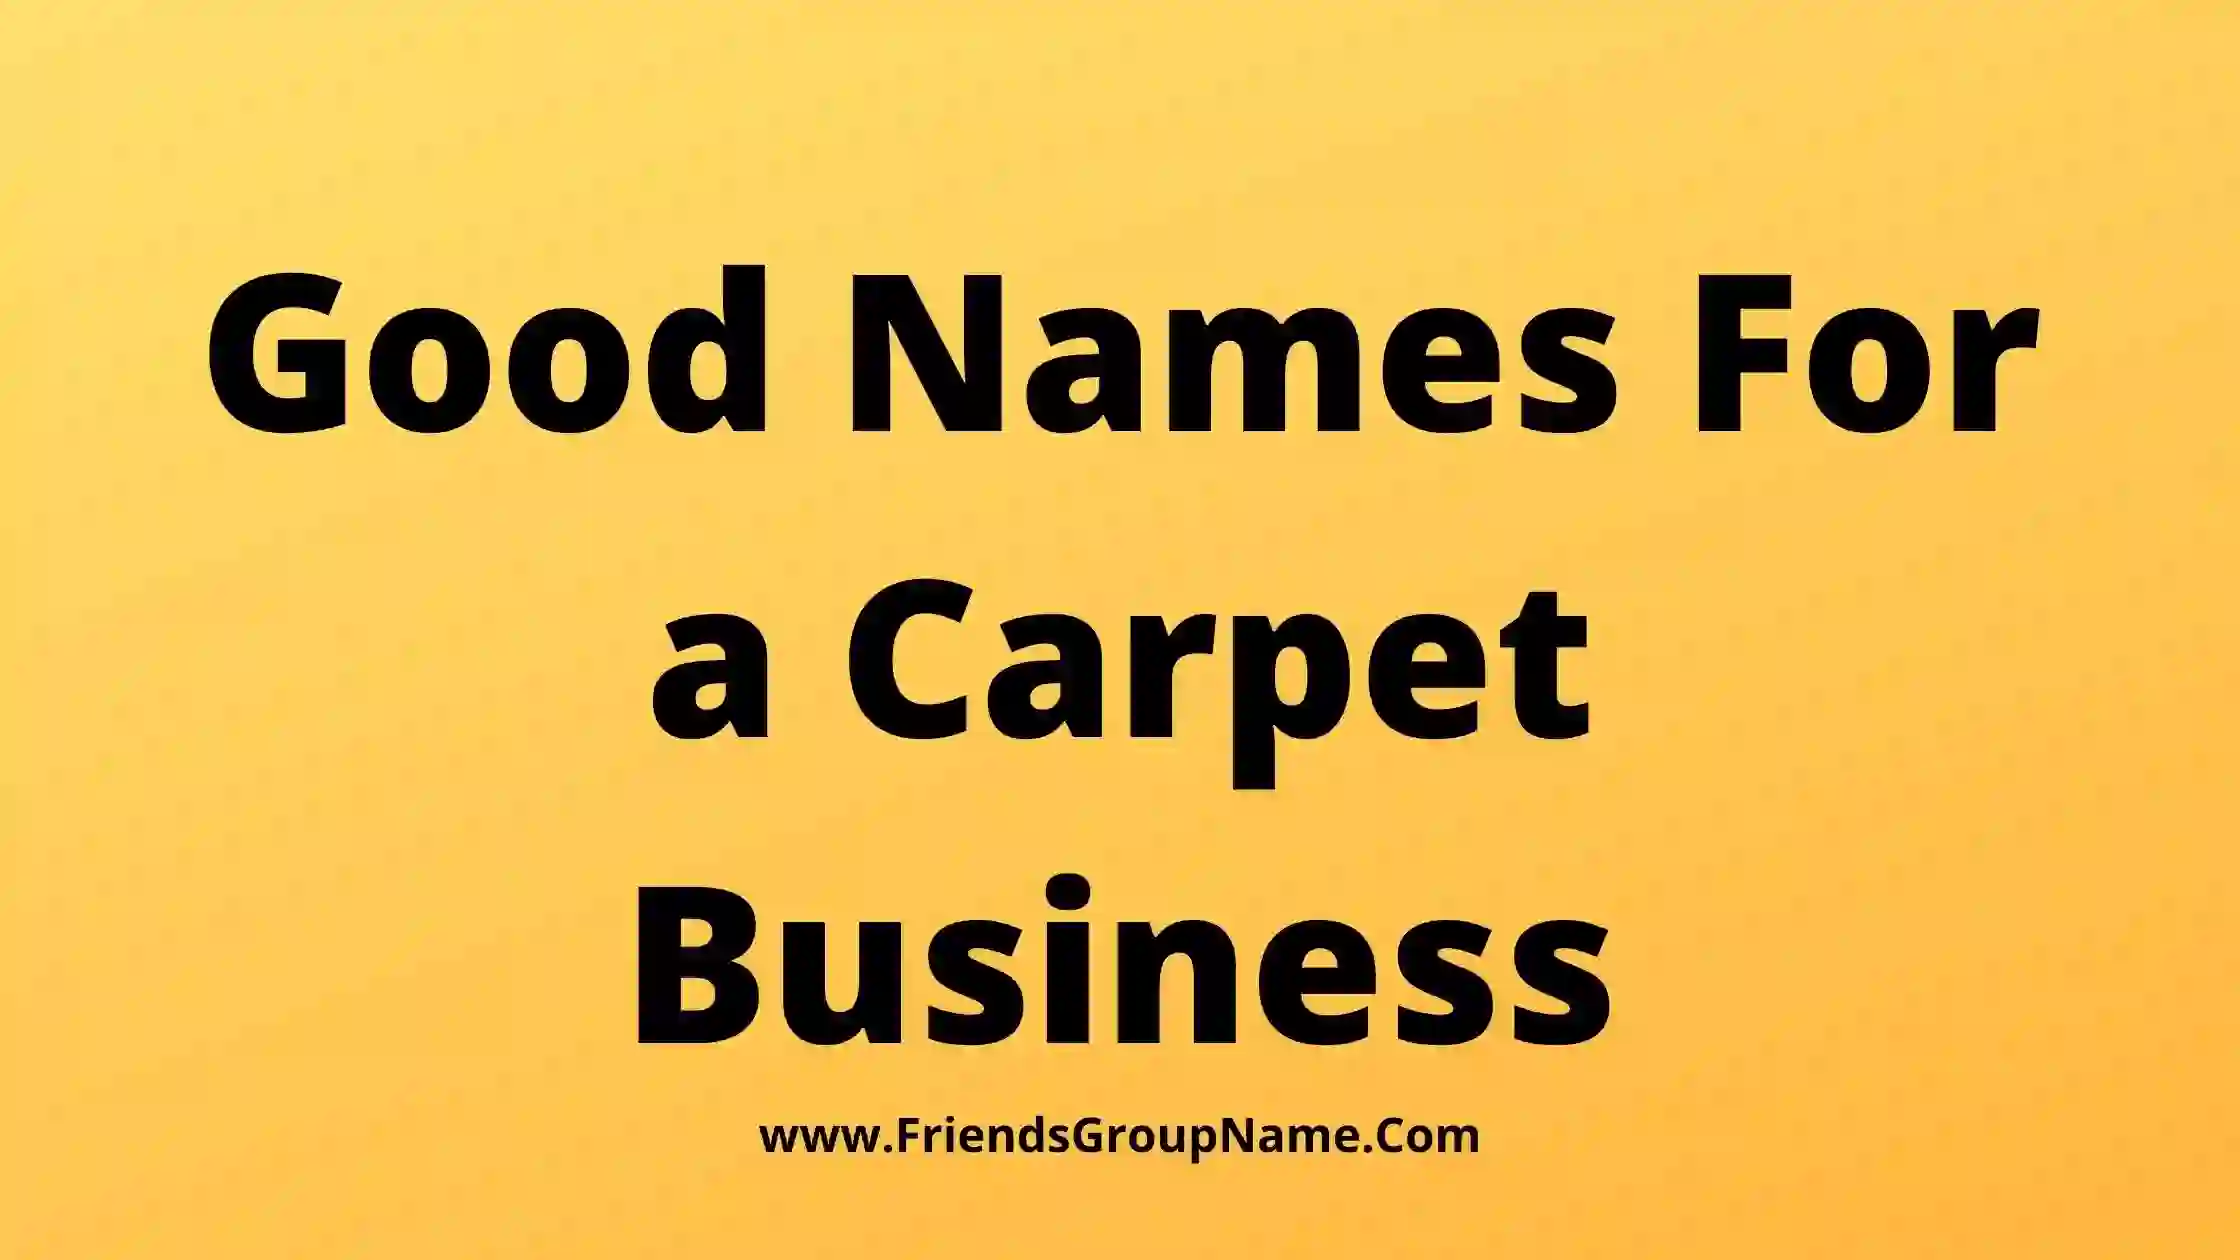 Good Names For a Carpet Business